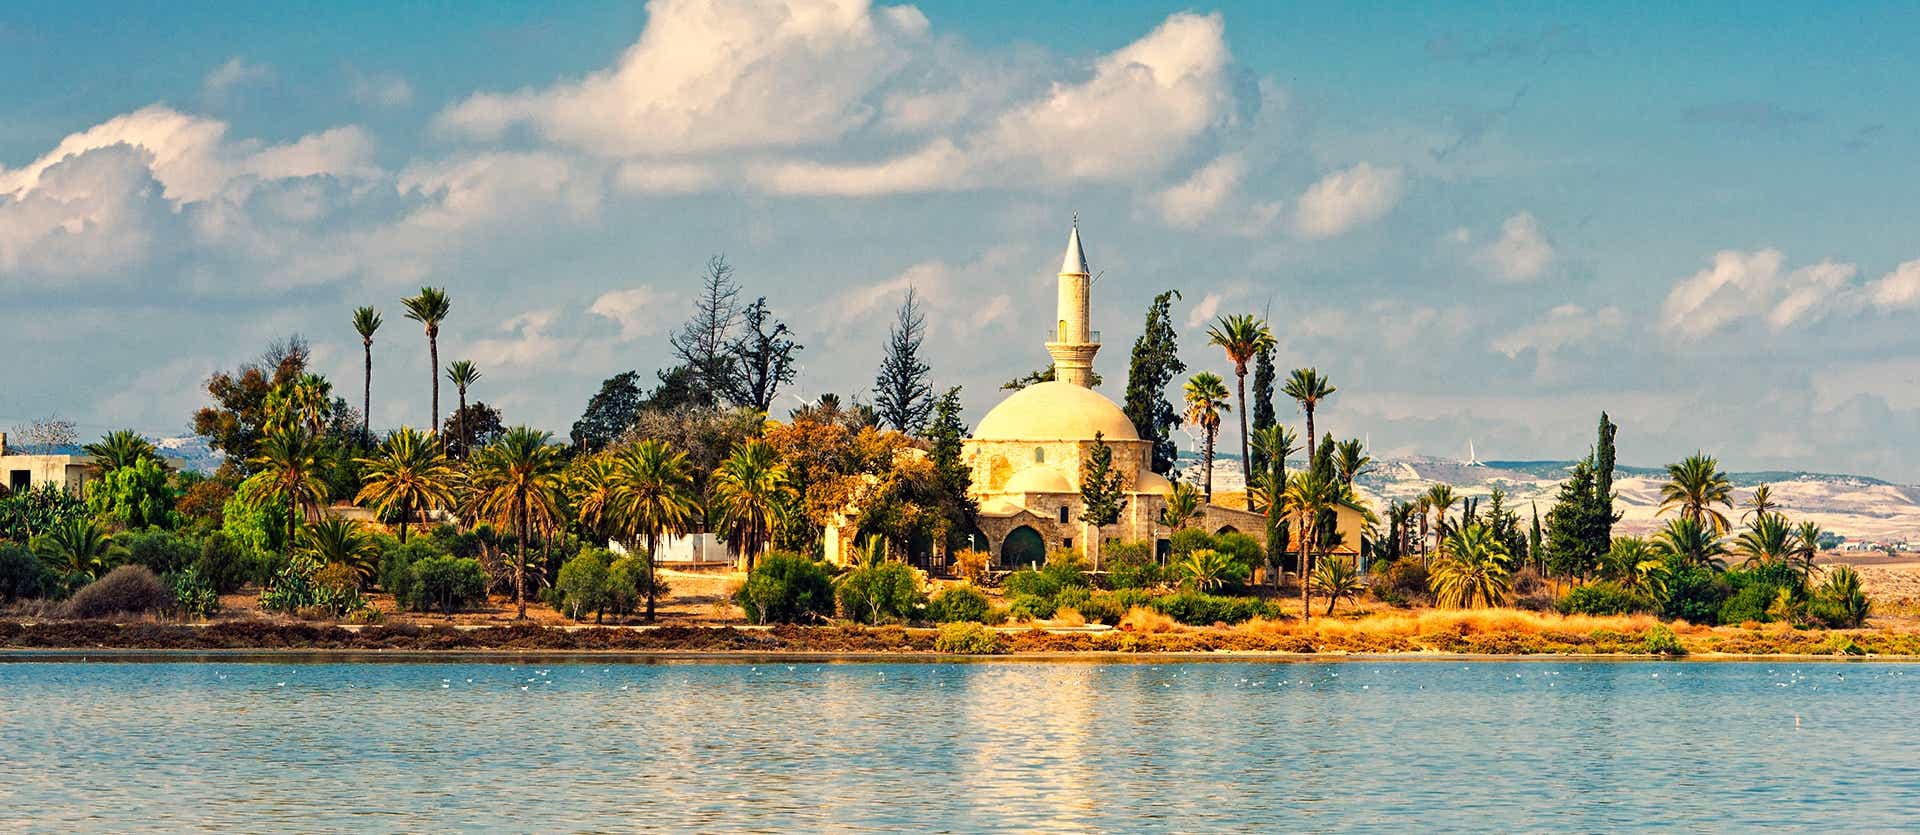 Hala Sultan Mosque <span class="iconos separador"></span> Larnaca <span class="iconos separador"></span> Cyprus